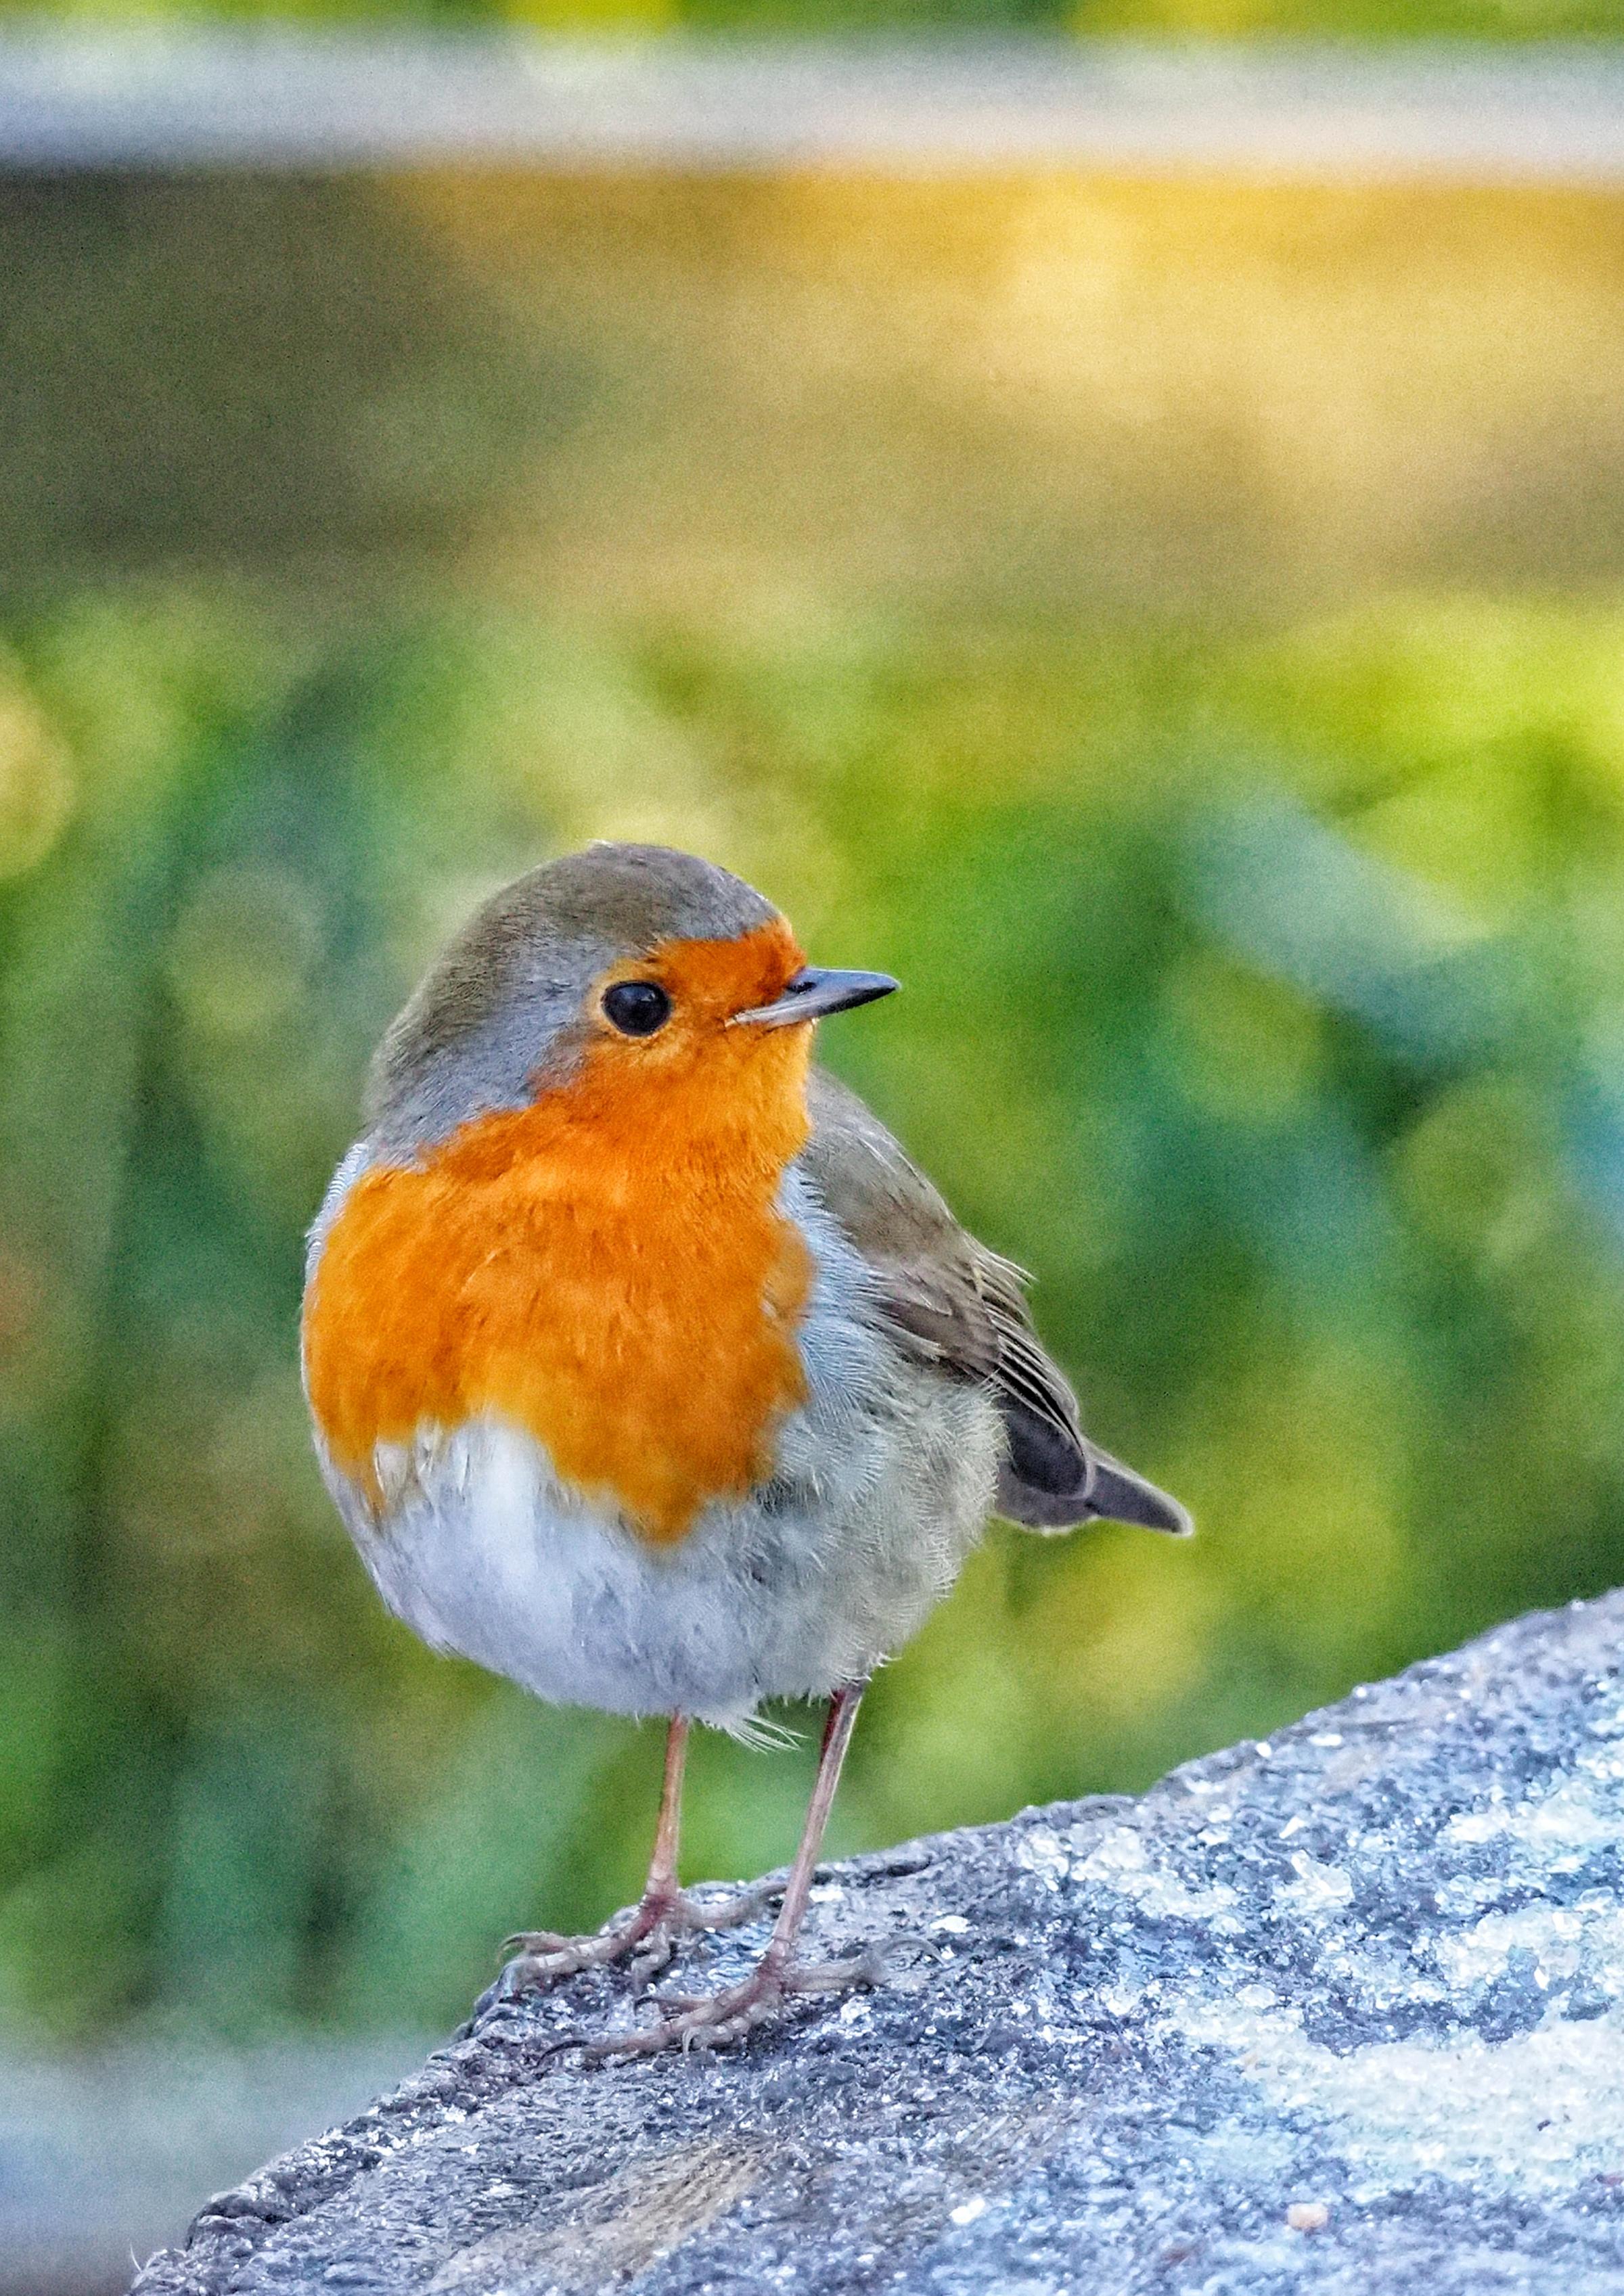 A robin at Lymm Dam